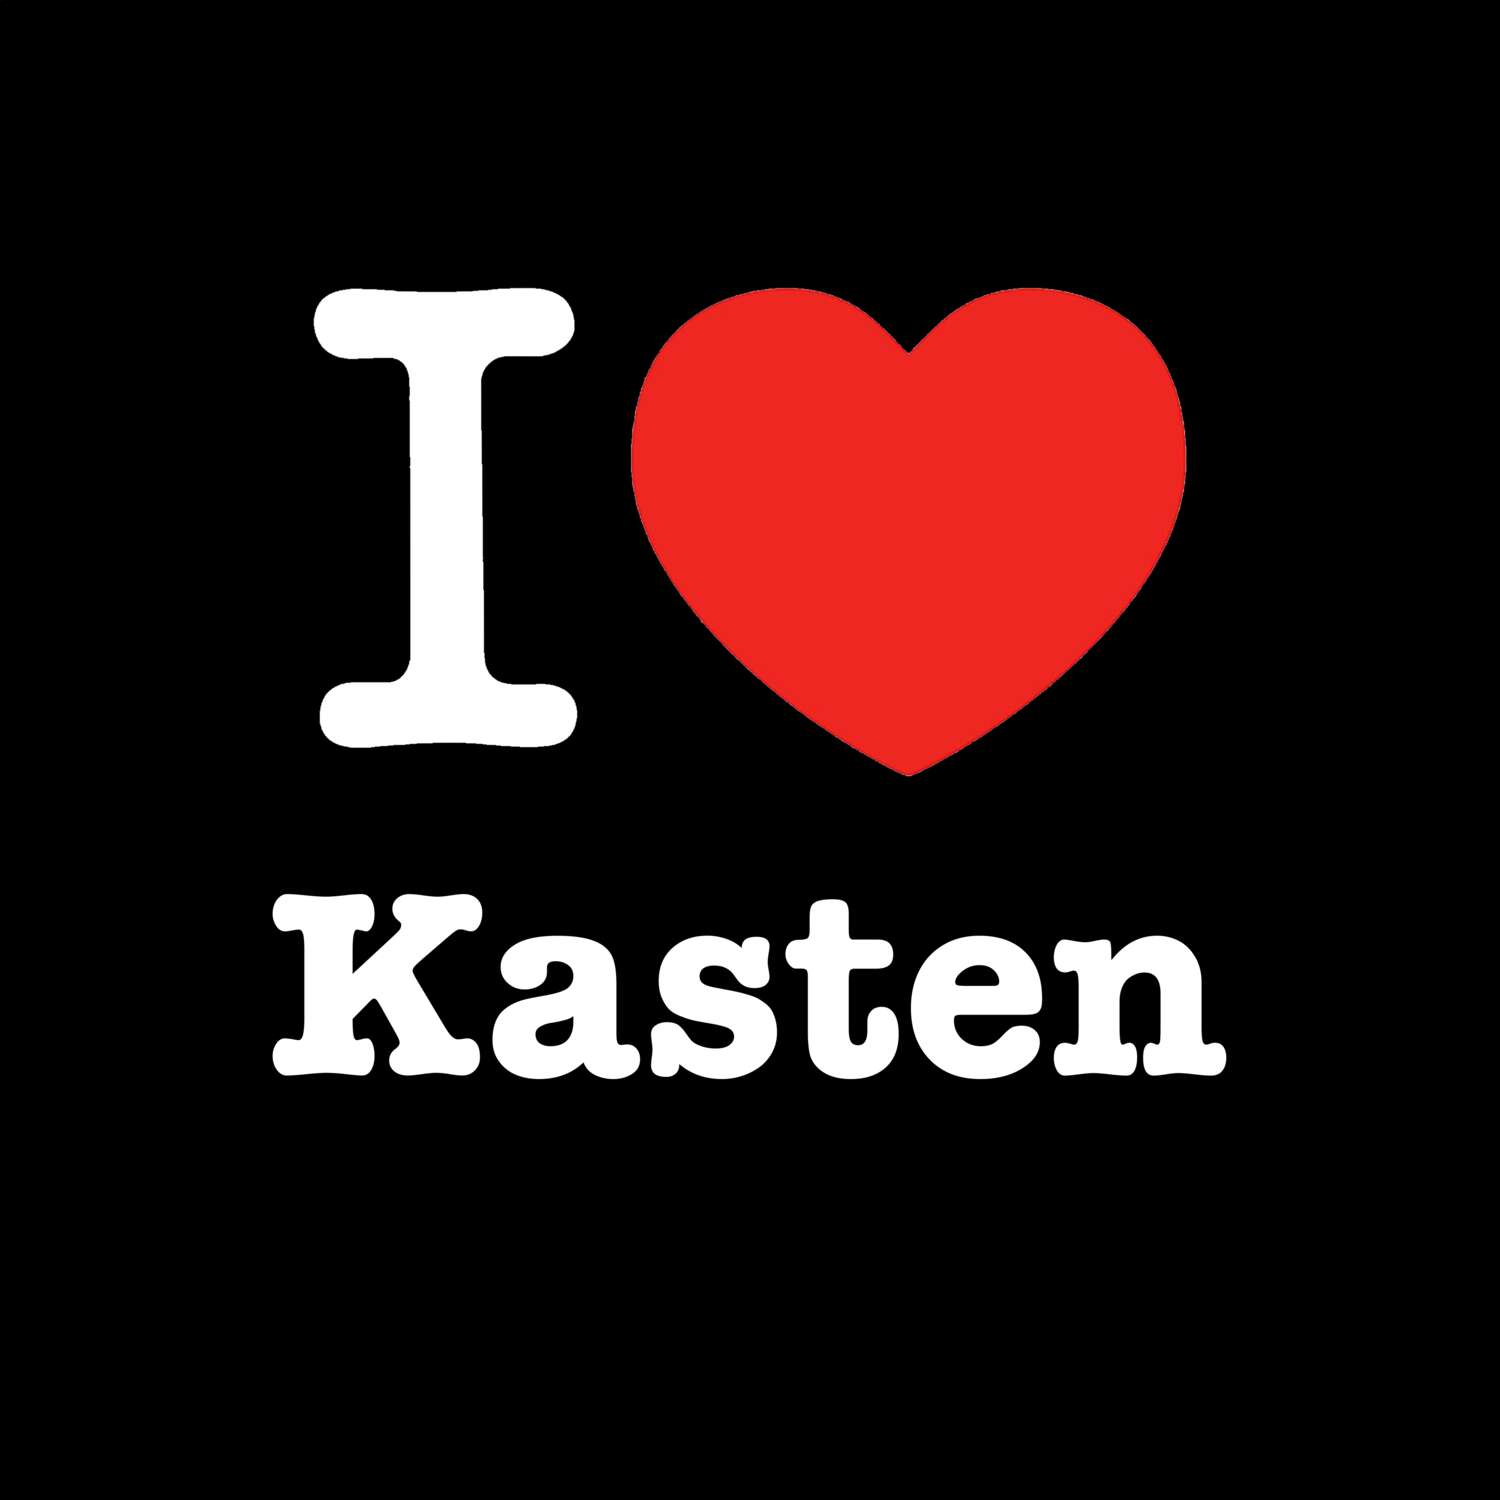 Kasten T-Shirt »I love«